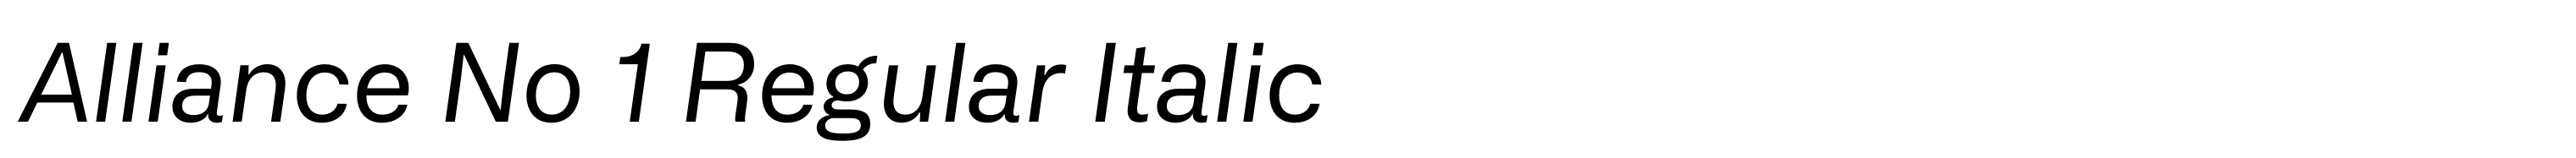 Alliance No 1 Regular Italic